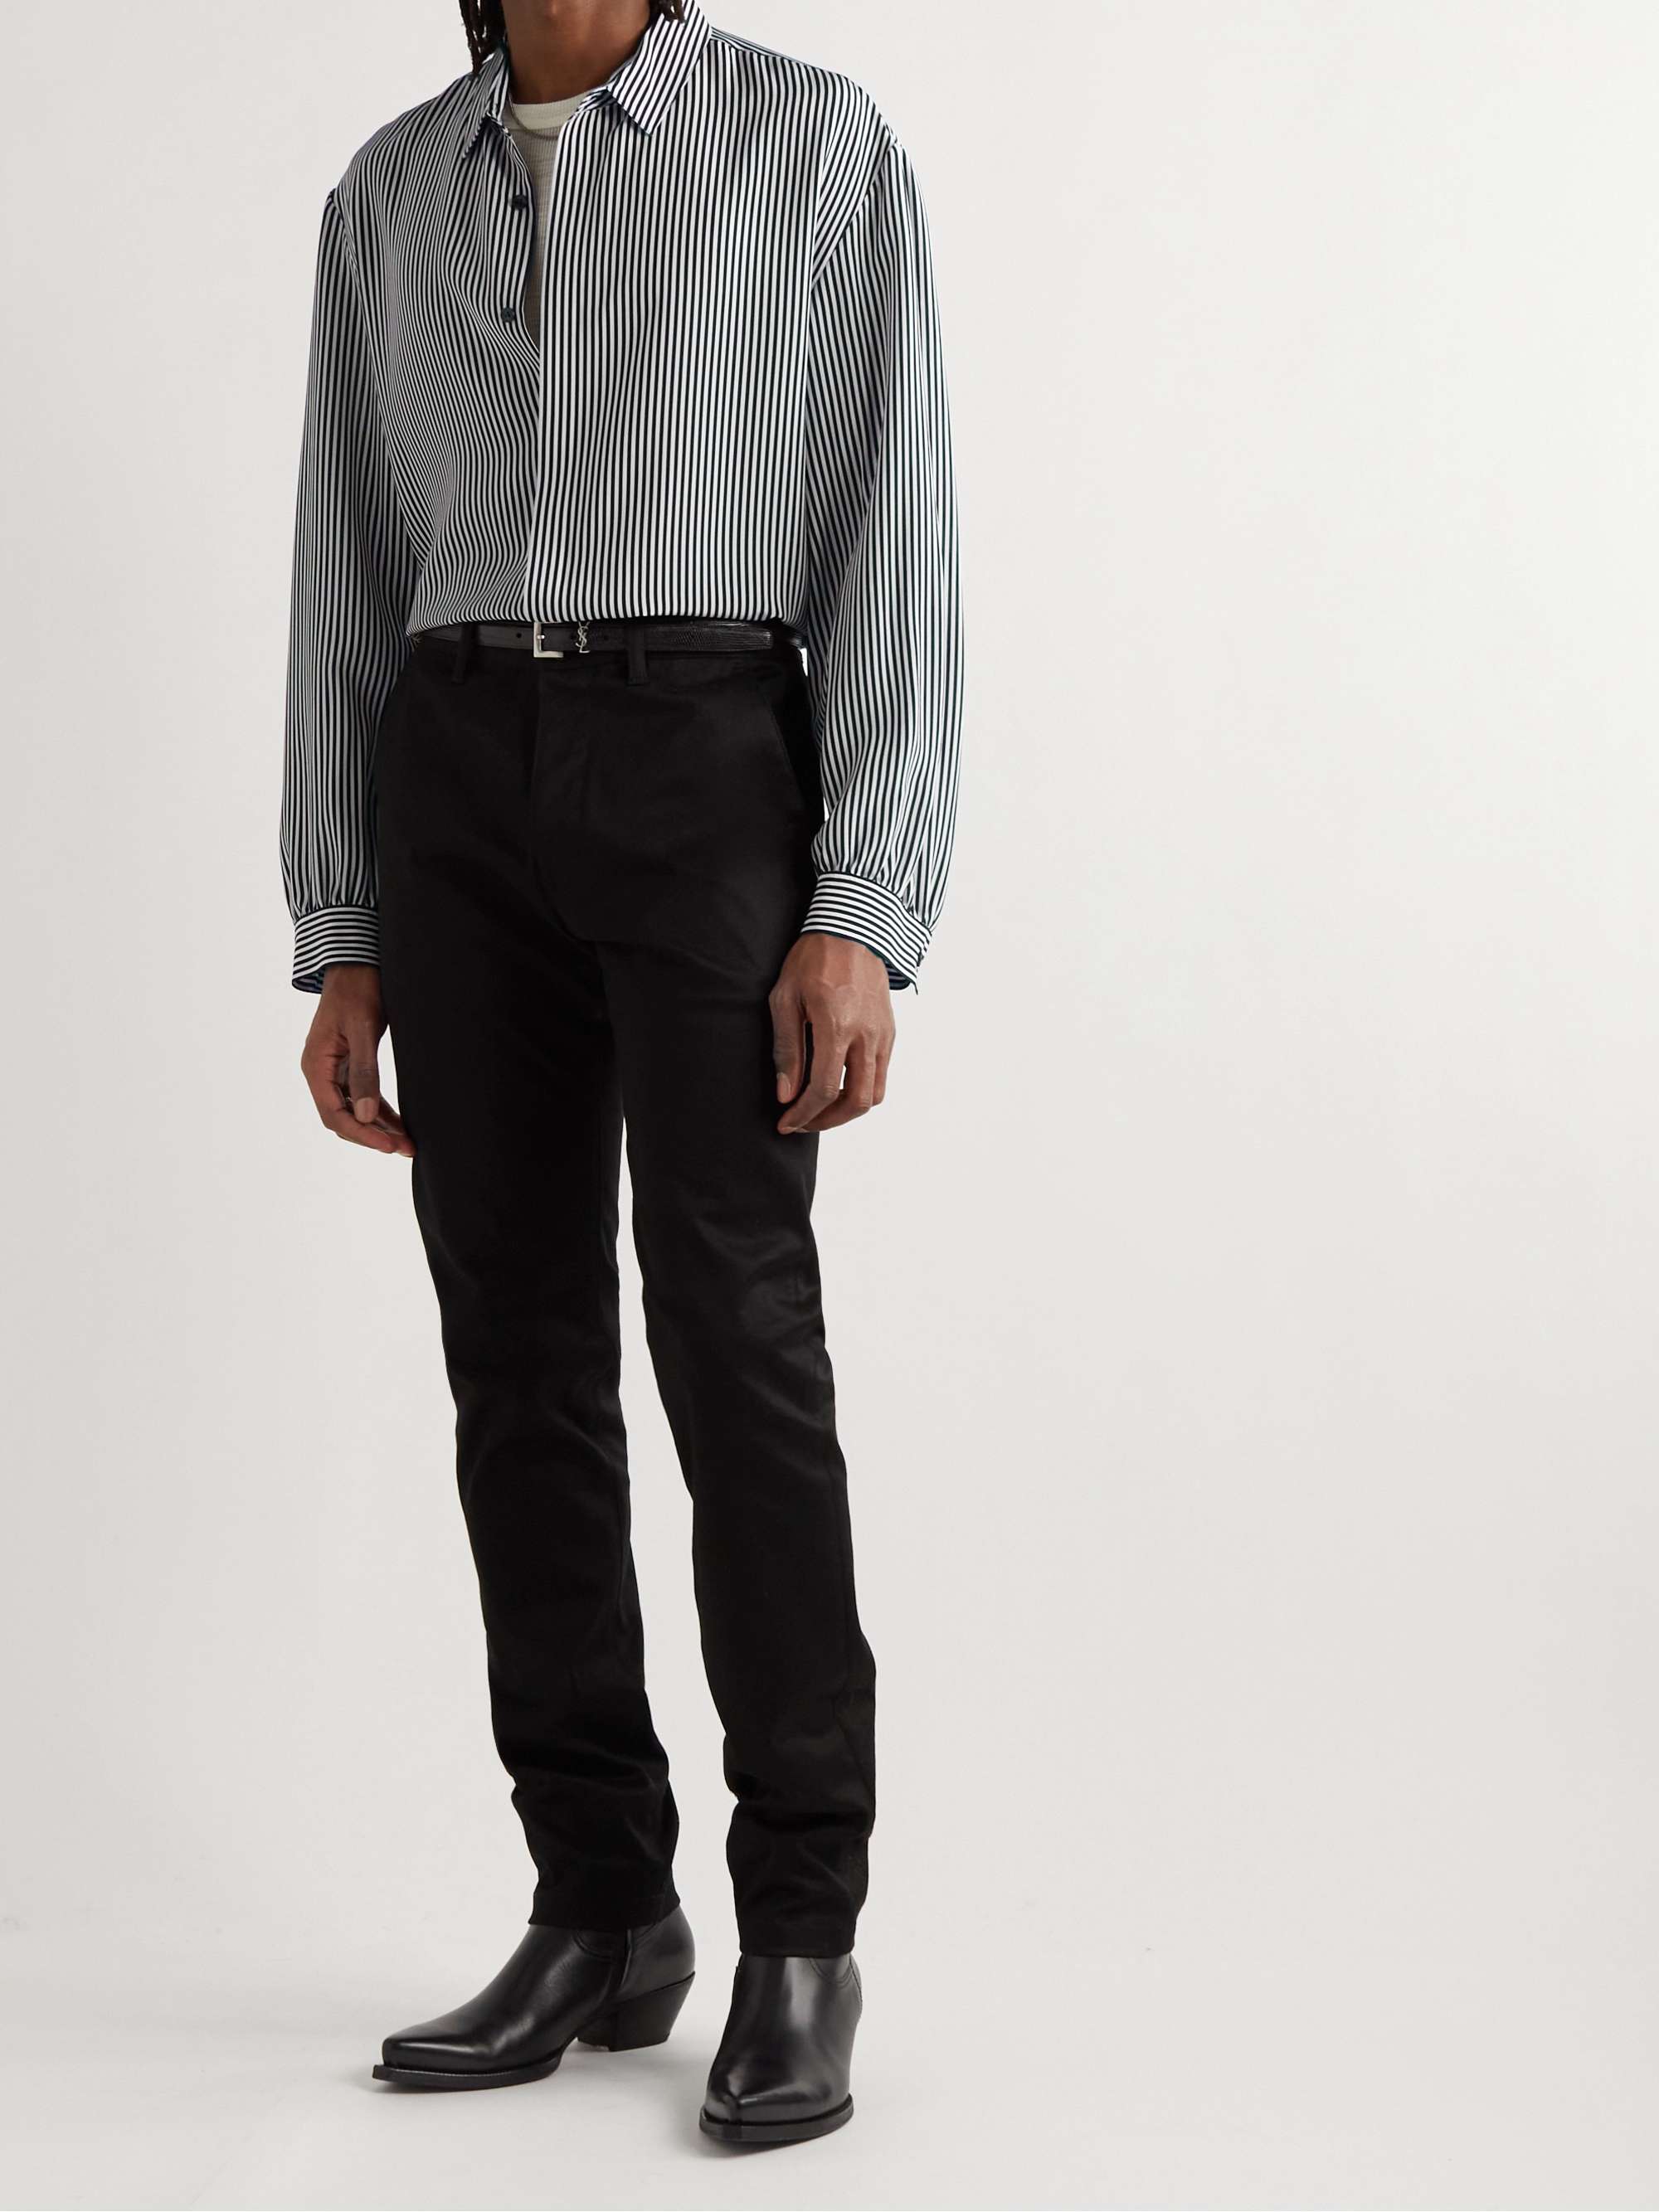 Saint Laurent Jacquard Silk Shirt in Black for Men Mens Clothing Shirts Casual shirts and button-up shirts 